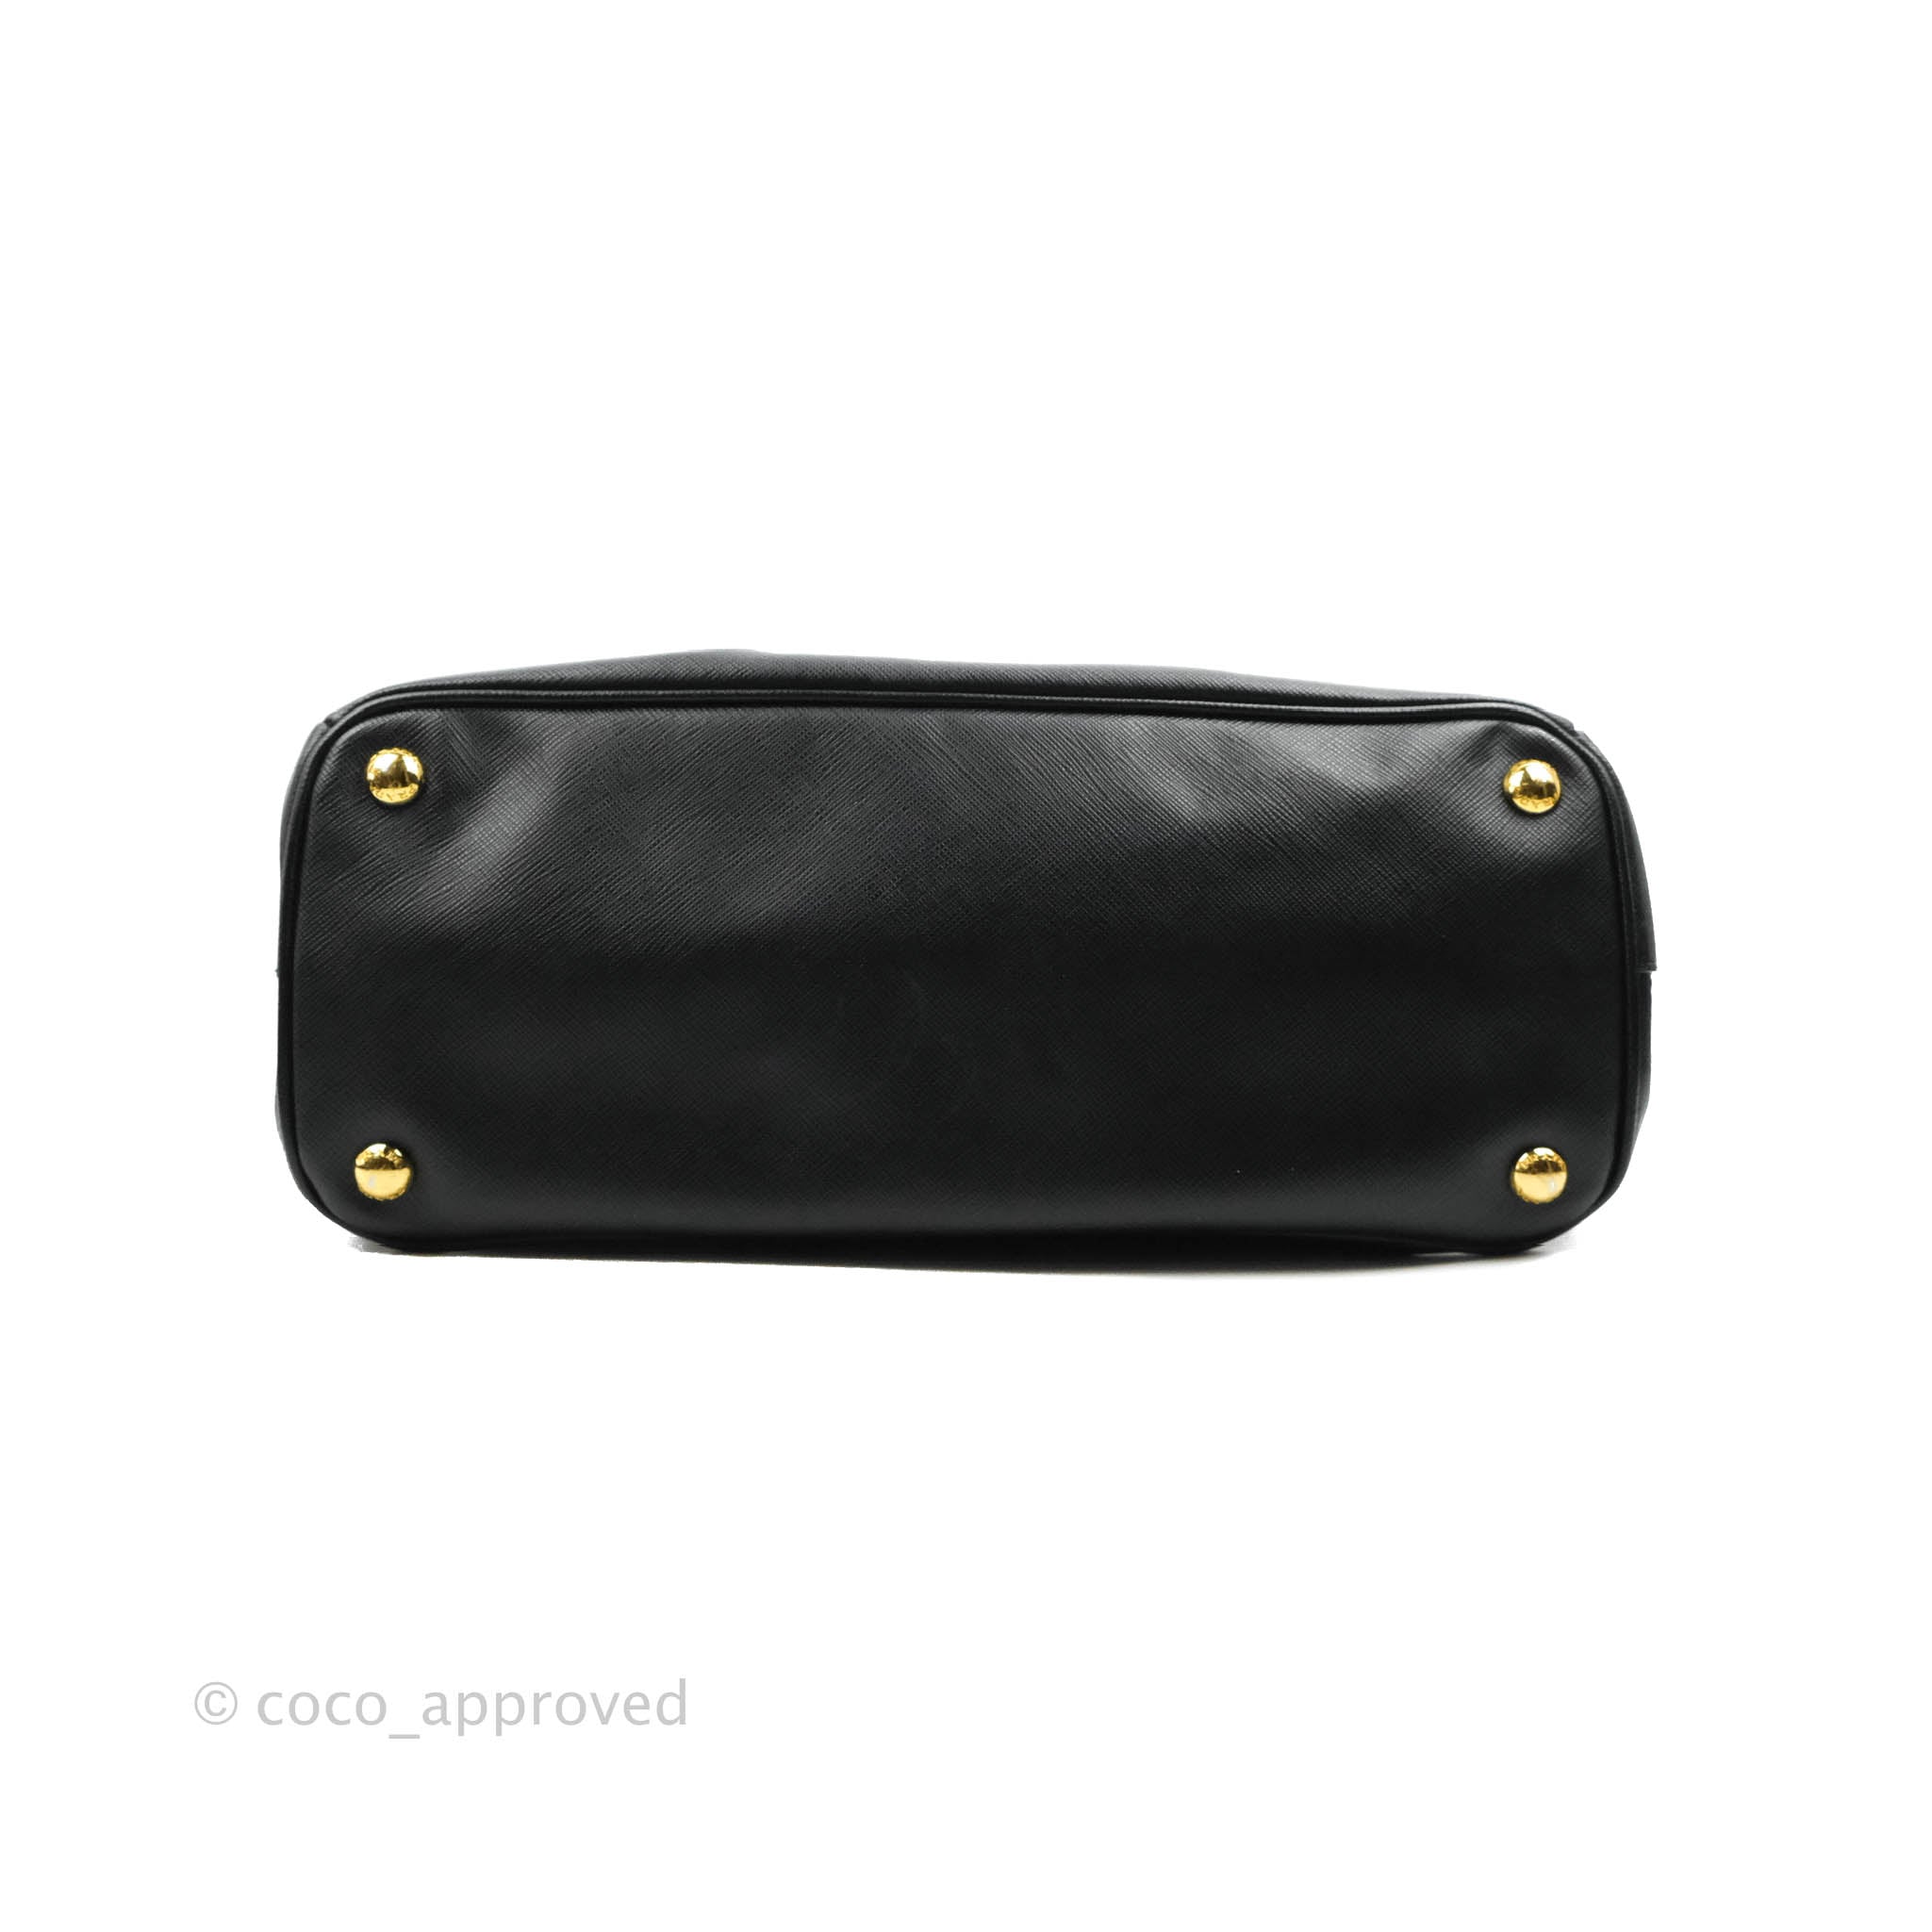 NWT AUTHENTIC Prada Galleria Saffiano Leather Double Zip Bag